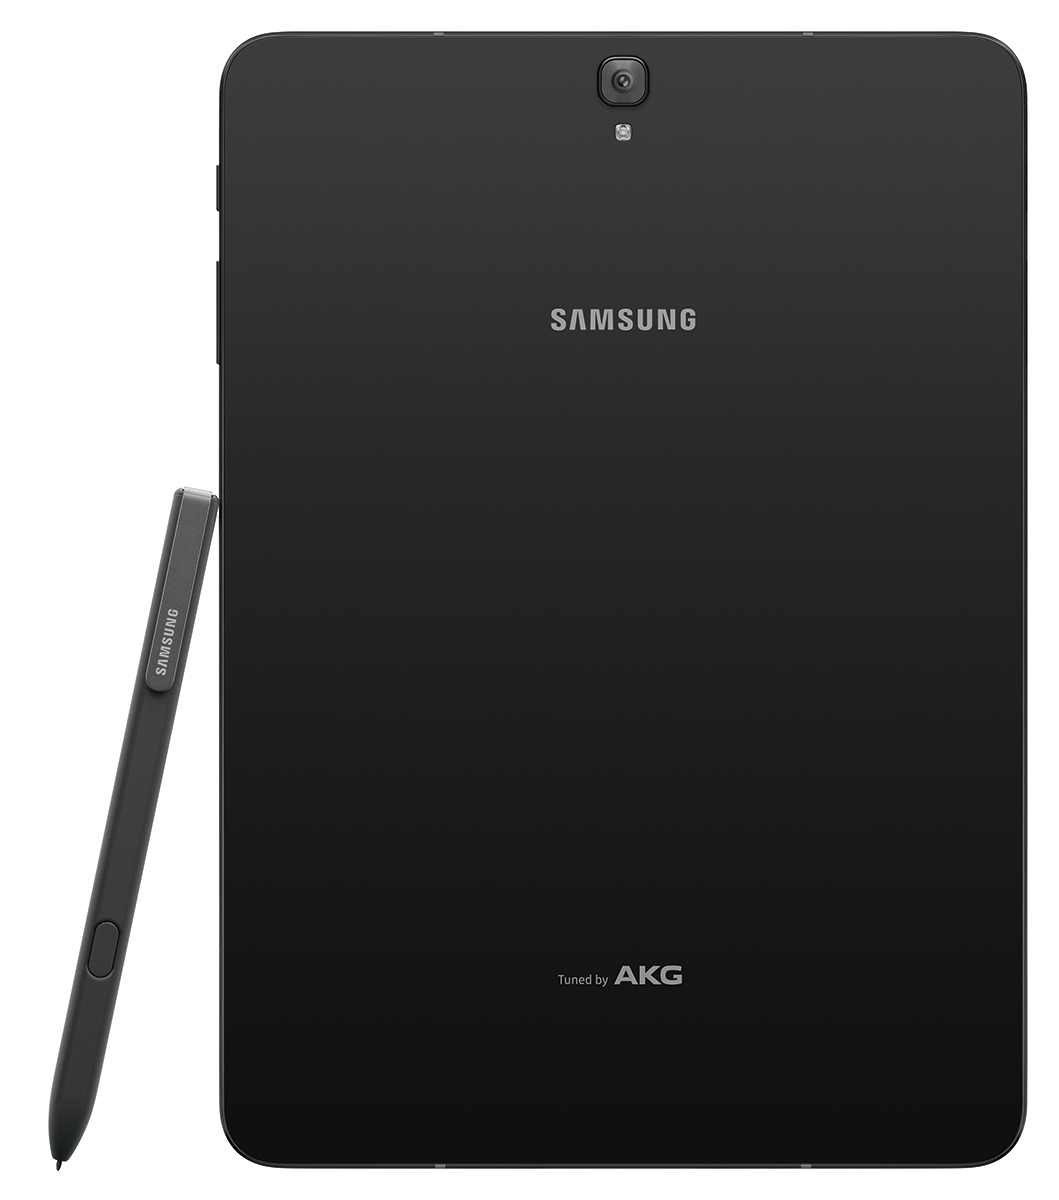 Samsung Galaxy Tab S3: 9.7 inch tablet SM-T820NZKAXAR | Samsung US